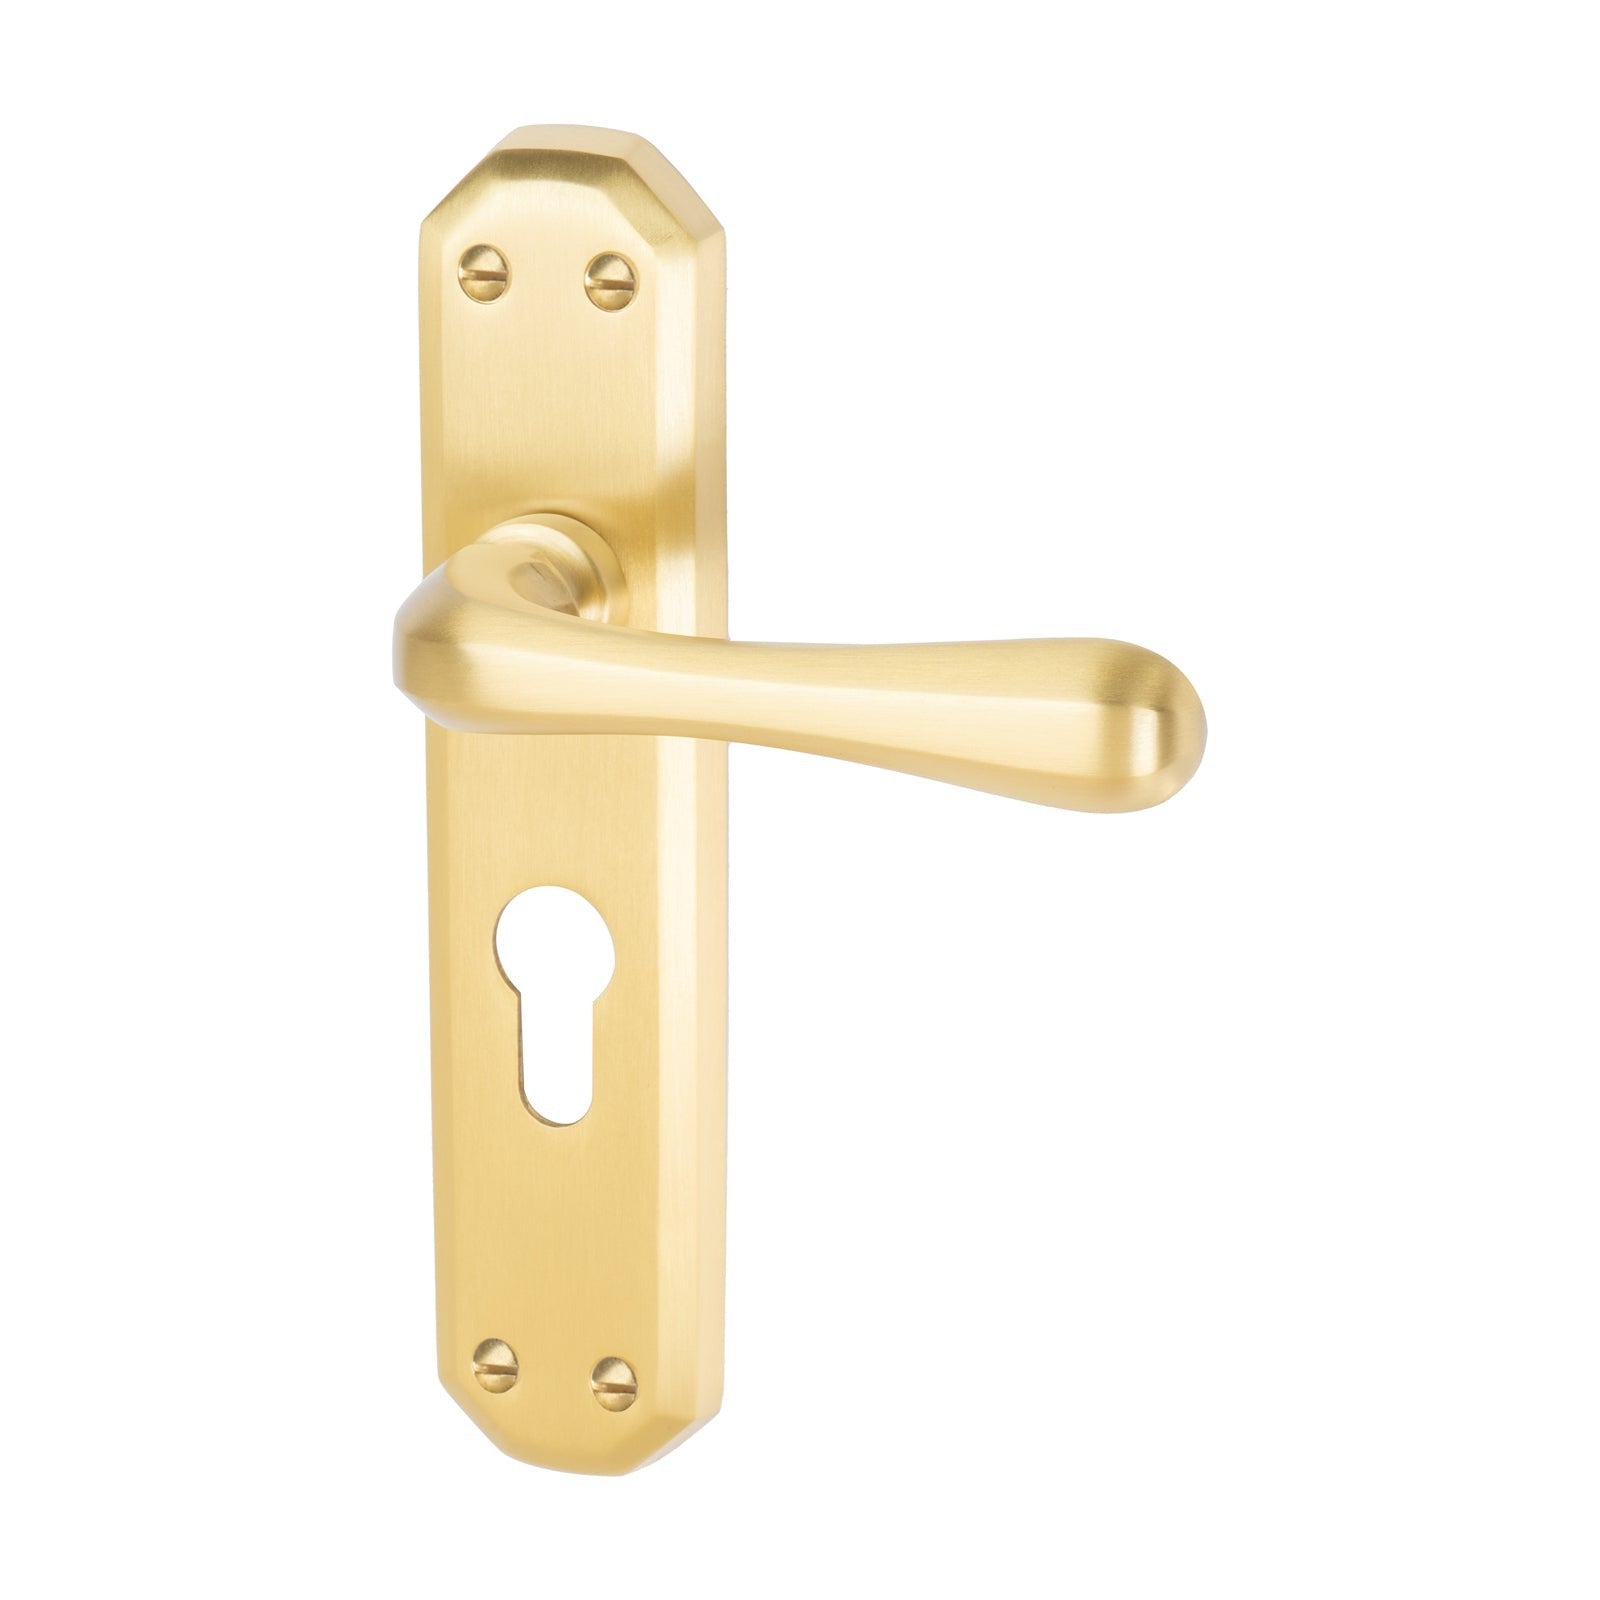 Charlbury Door Handles On Plate Euro Lock Handle in Satin Brass 